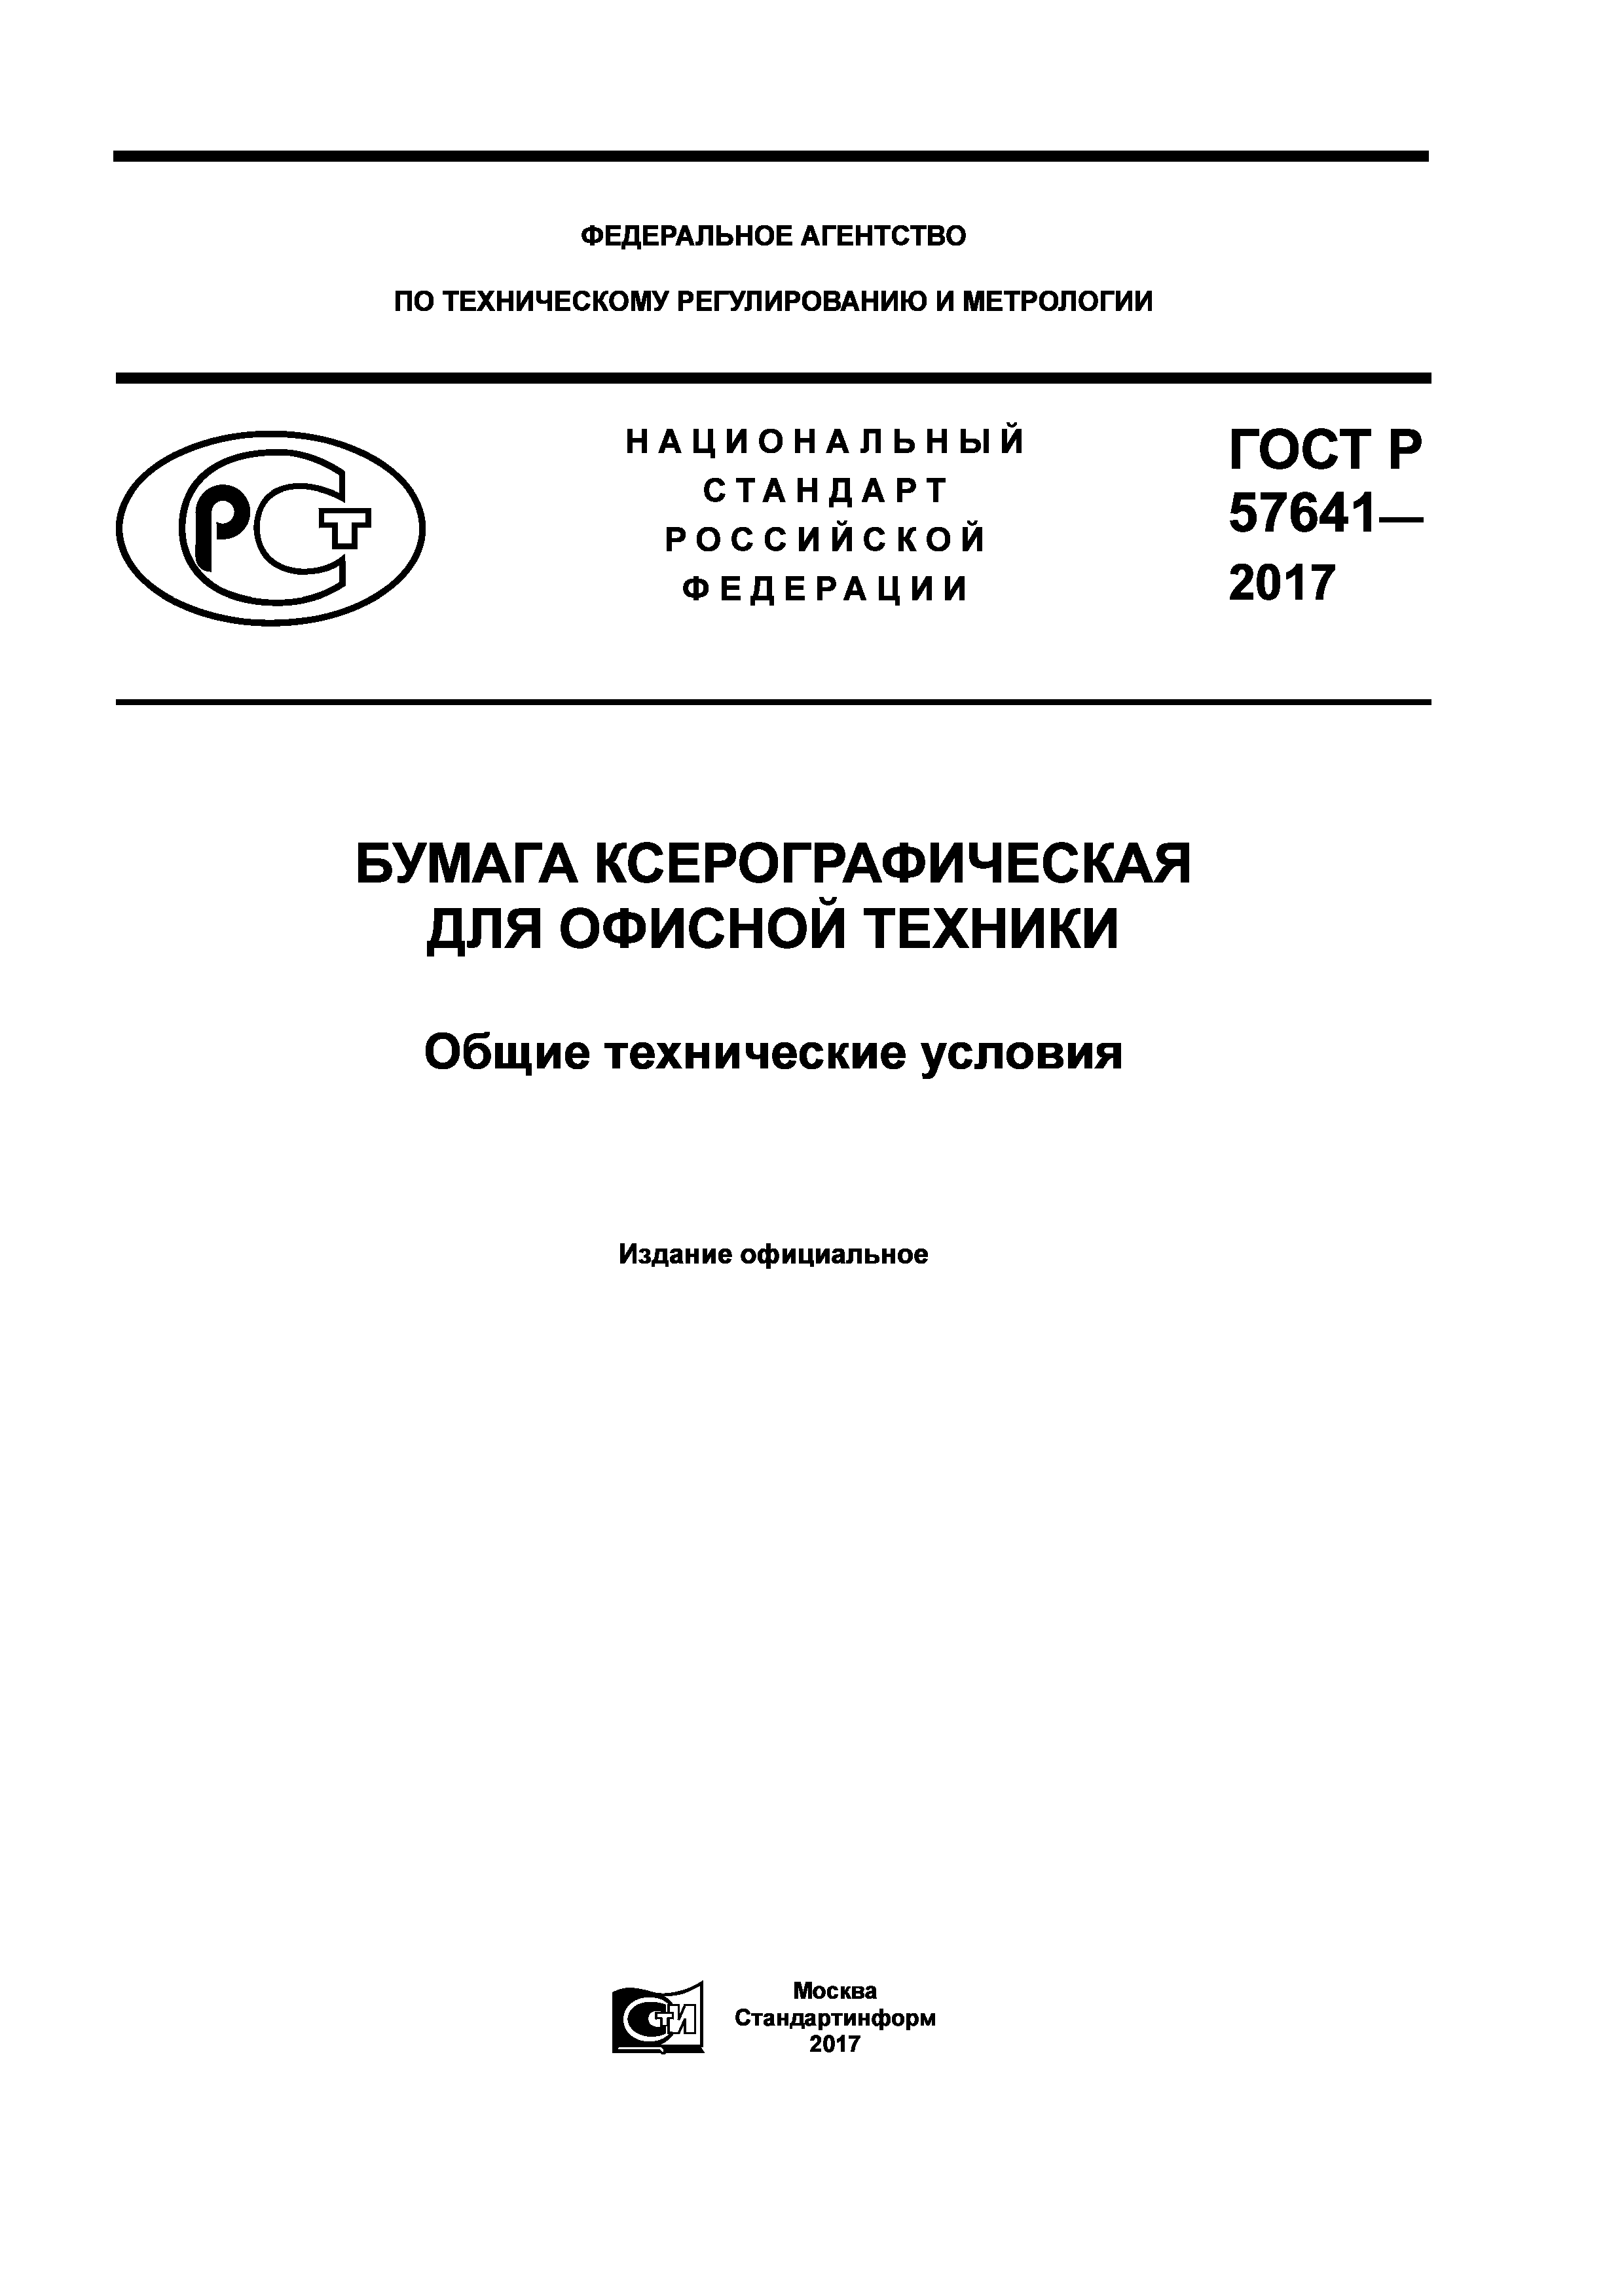 ГОСТ Р 57641-2017